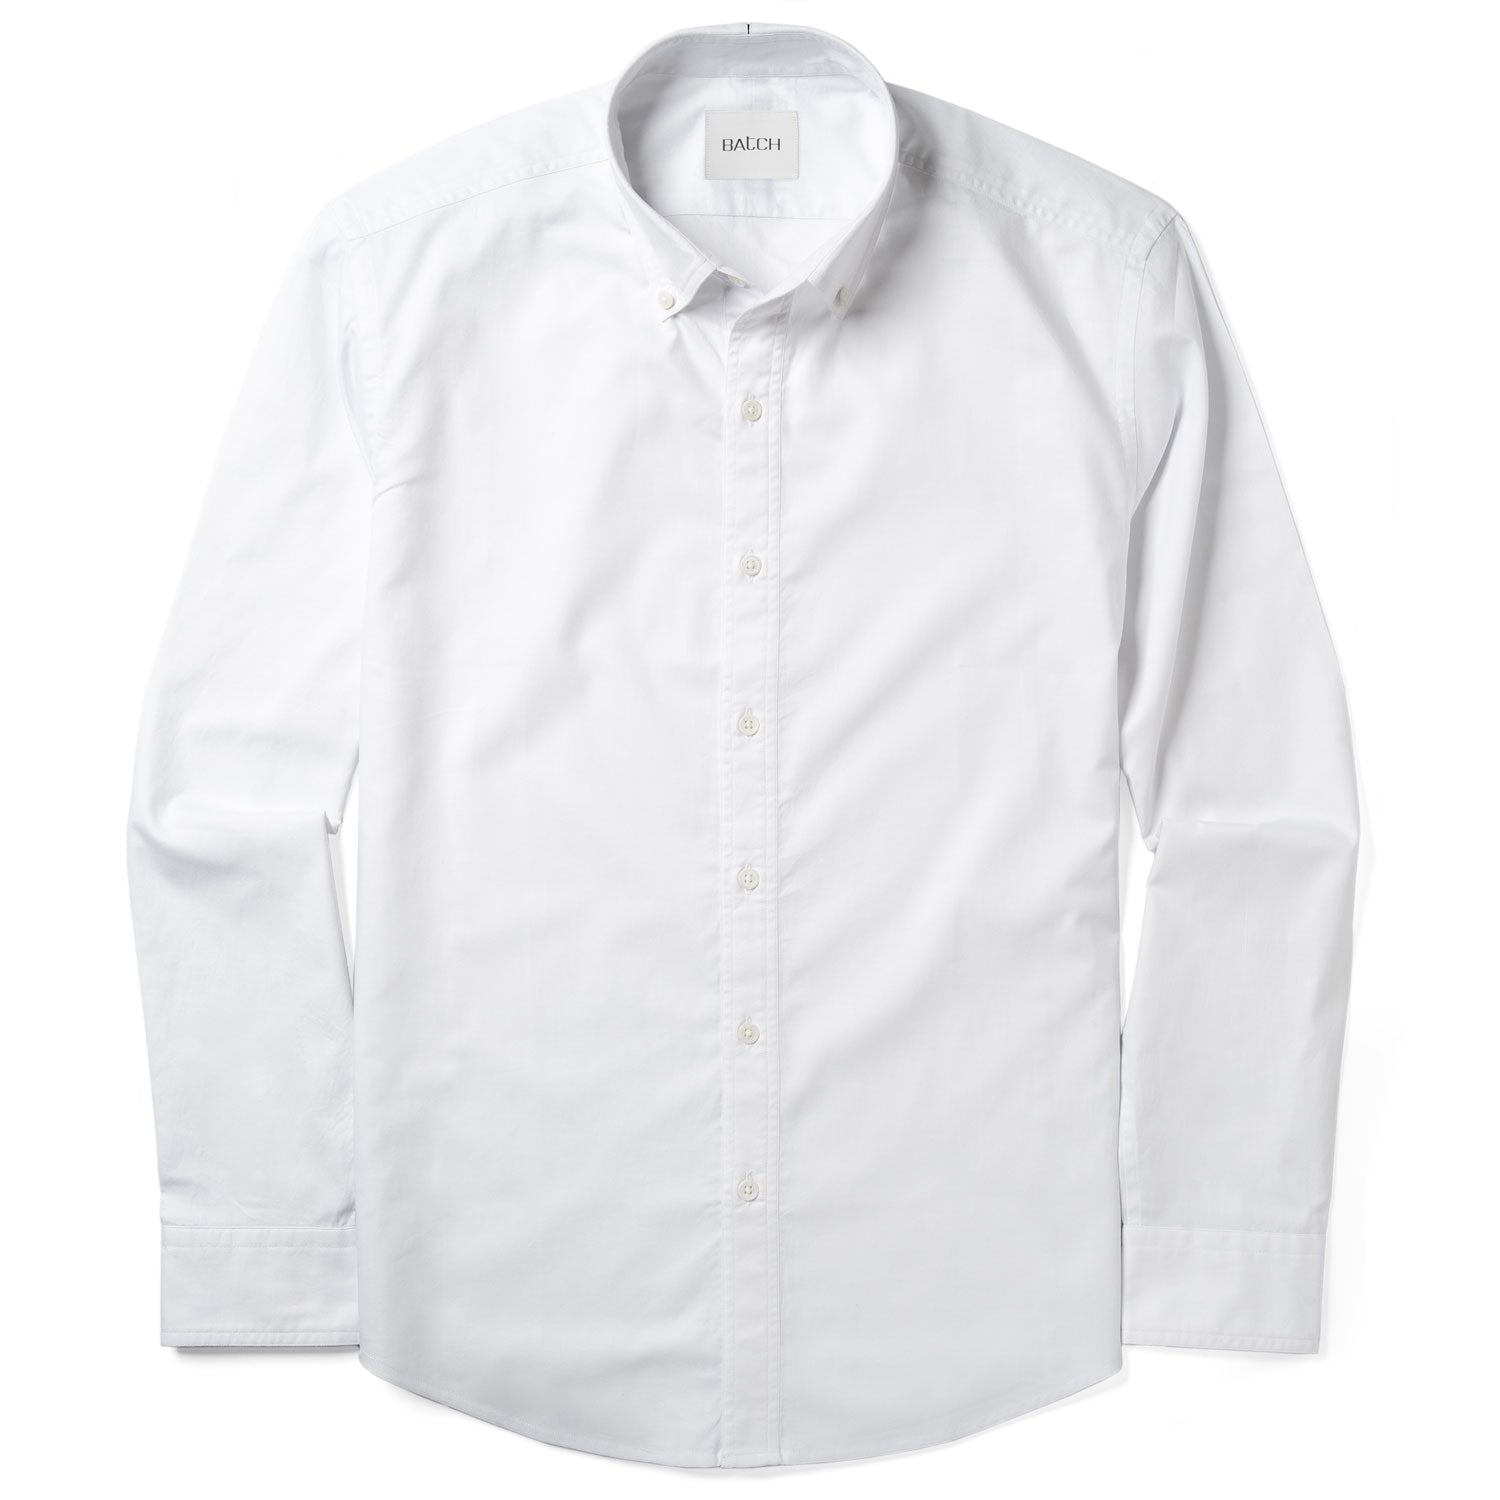 Men's Casual Button Down Shirt in Classic White Cotton Twill Medium